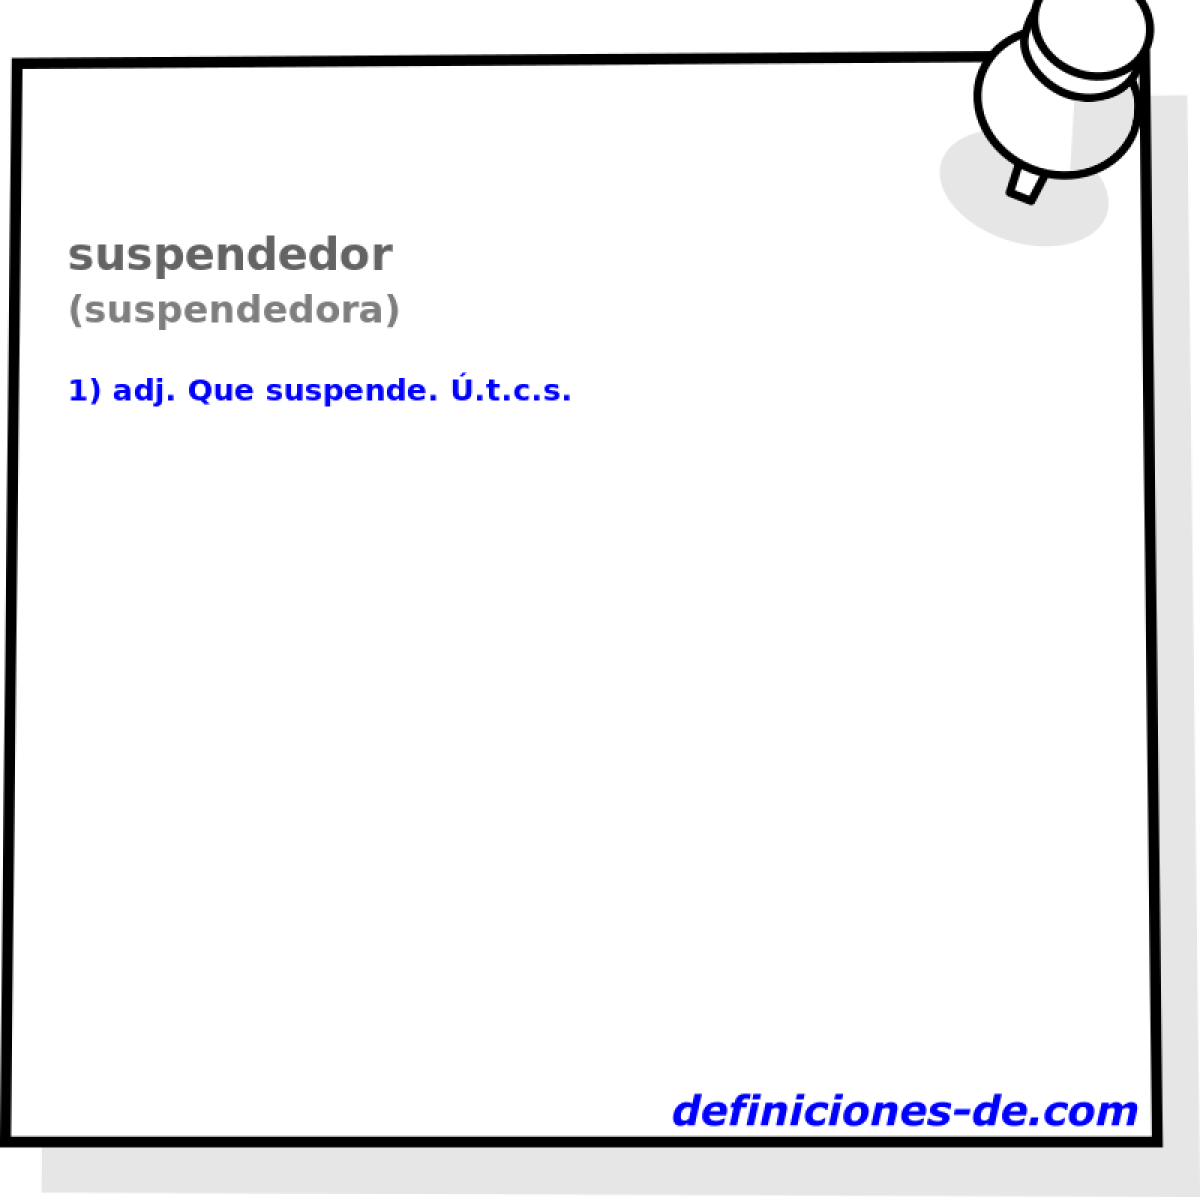 suspendedor (suspendedora)